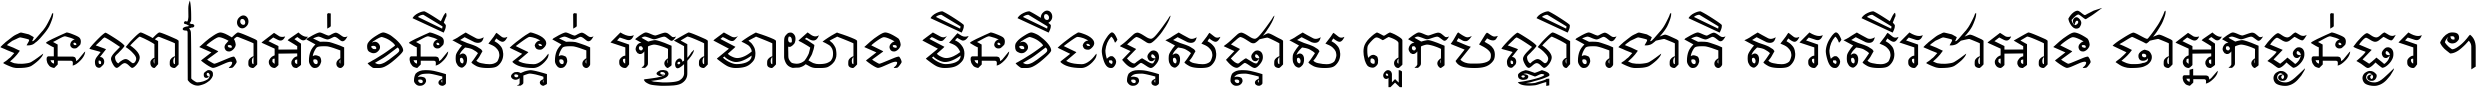 NokorReach Khmer Pali Plus